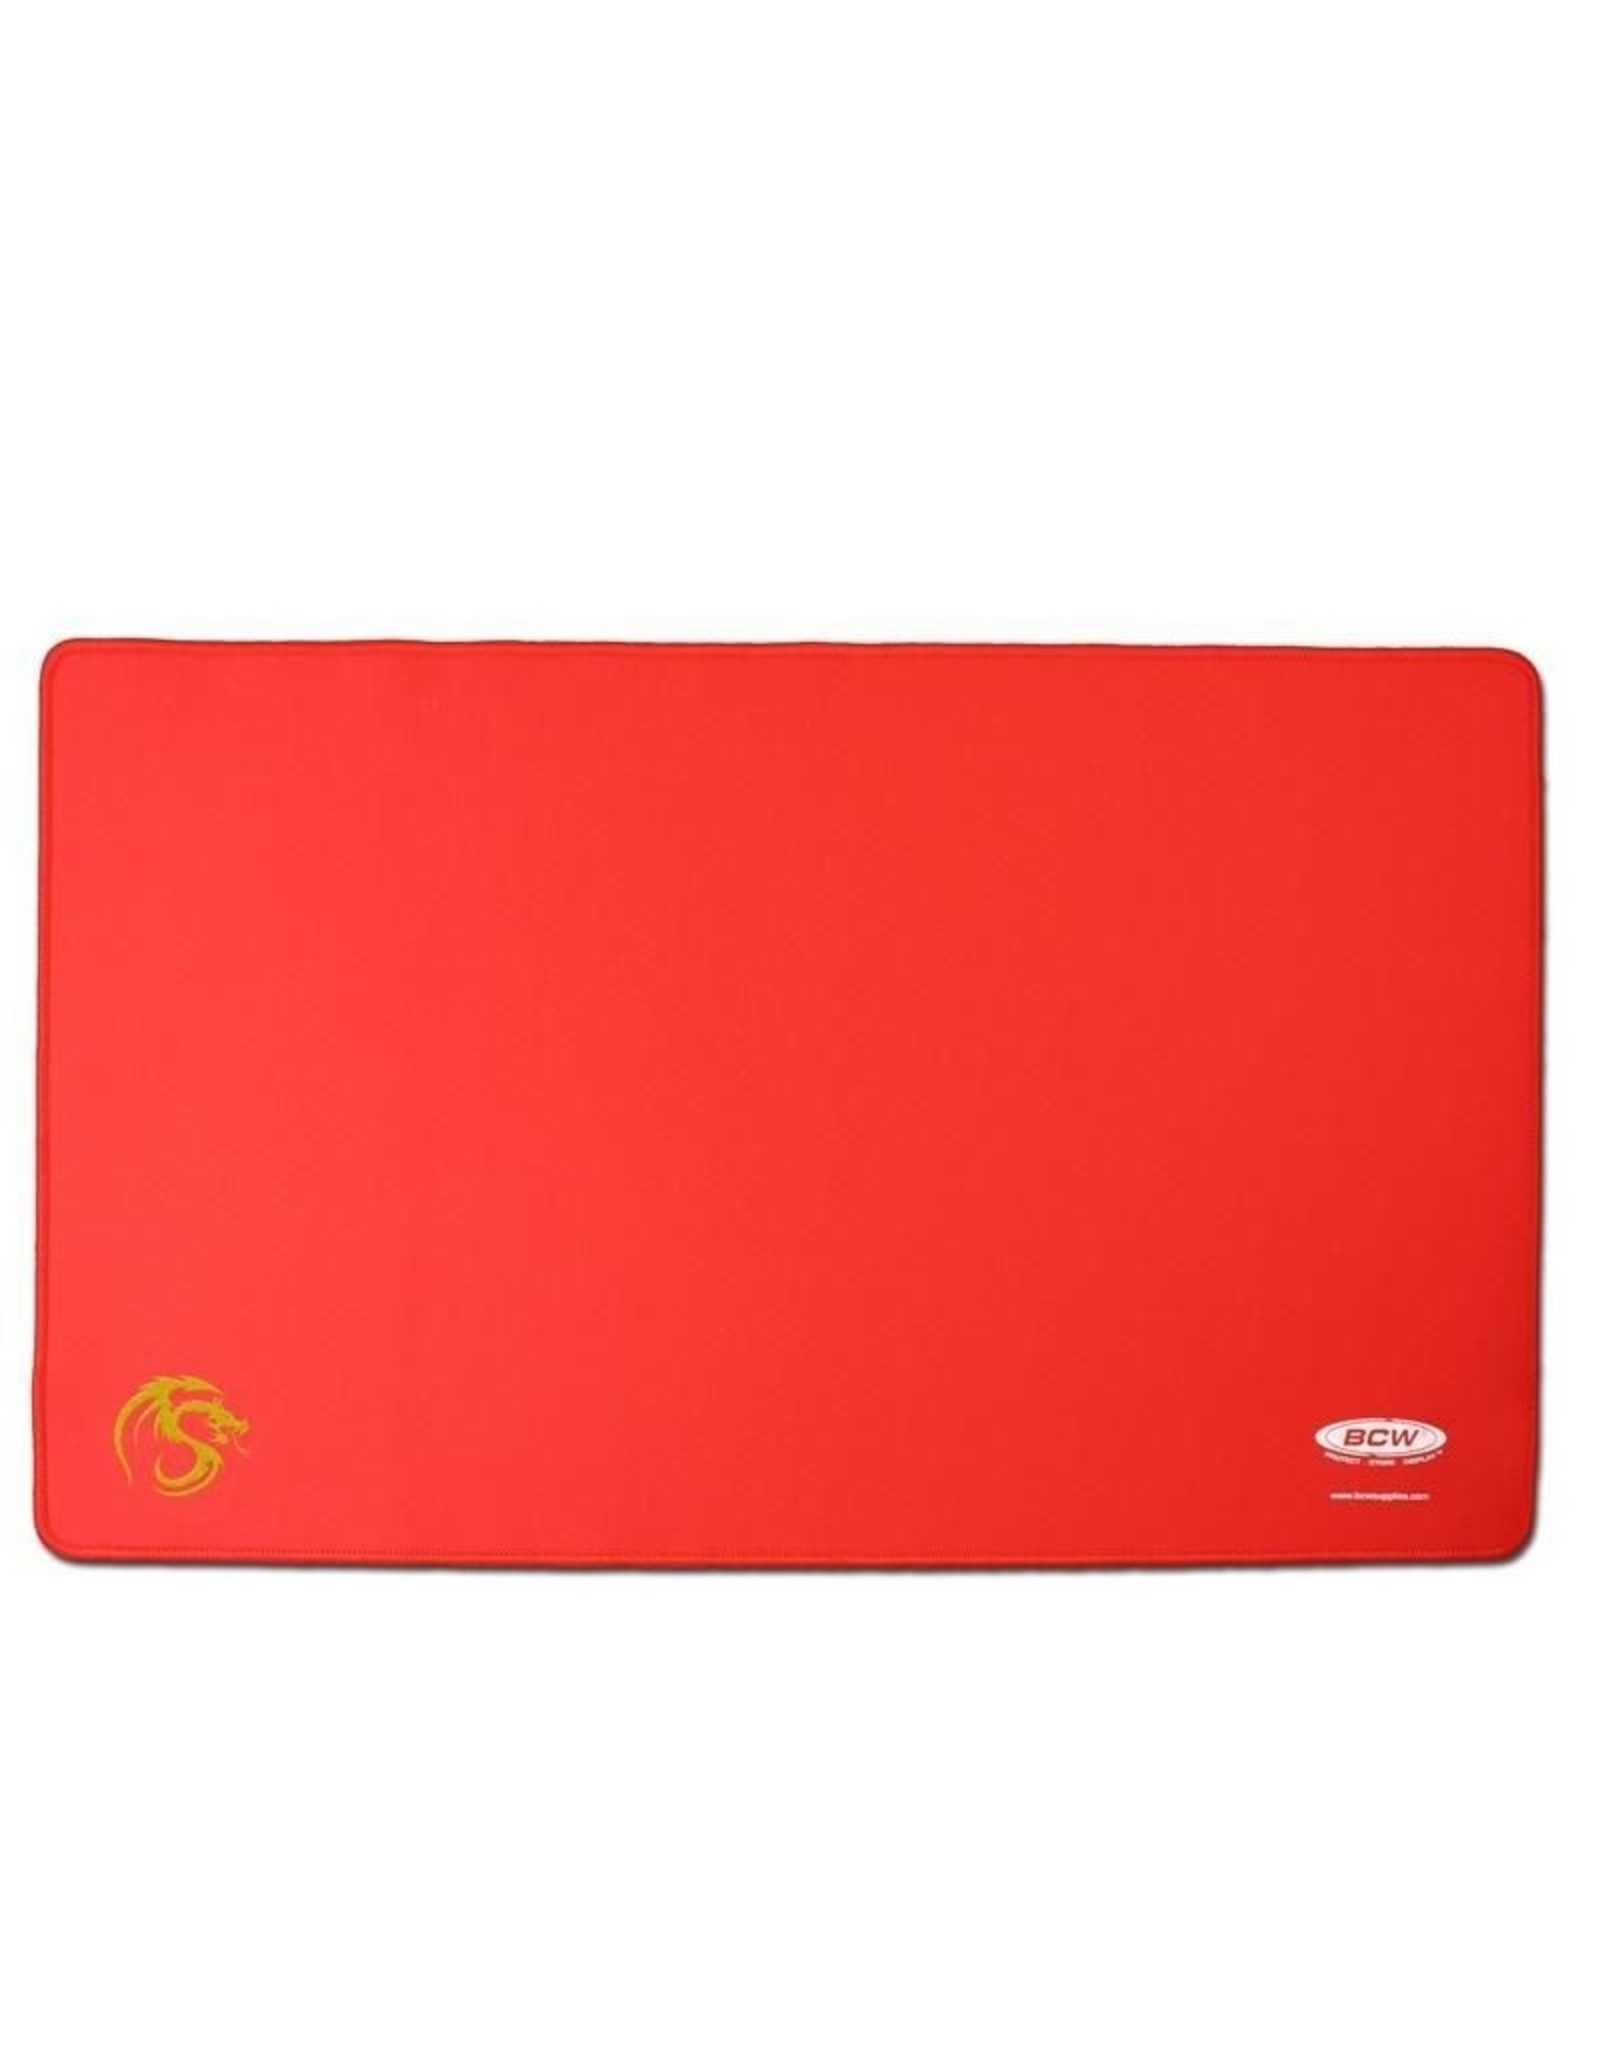 Standard Playmat: Red